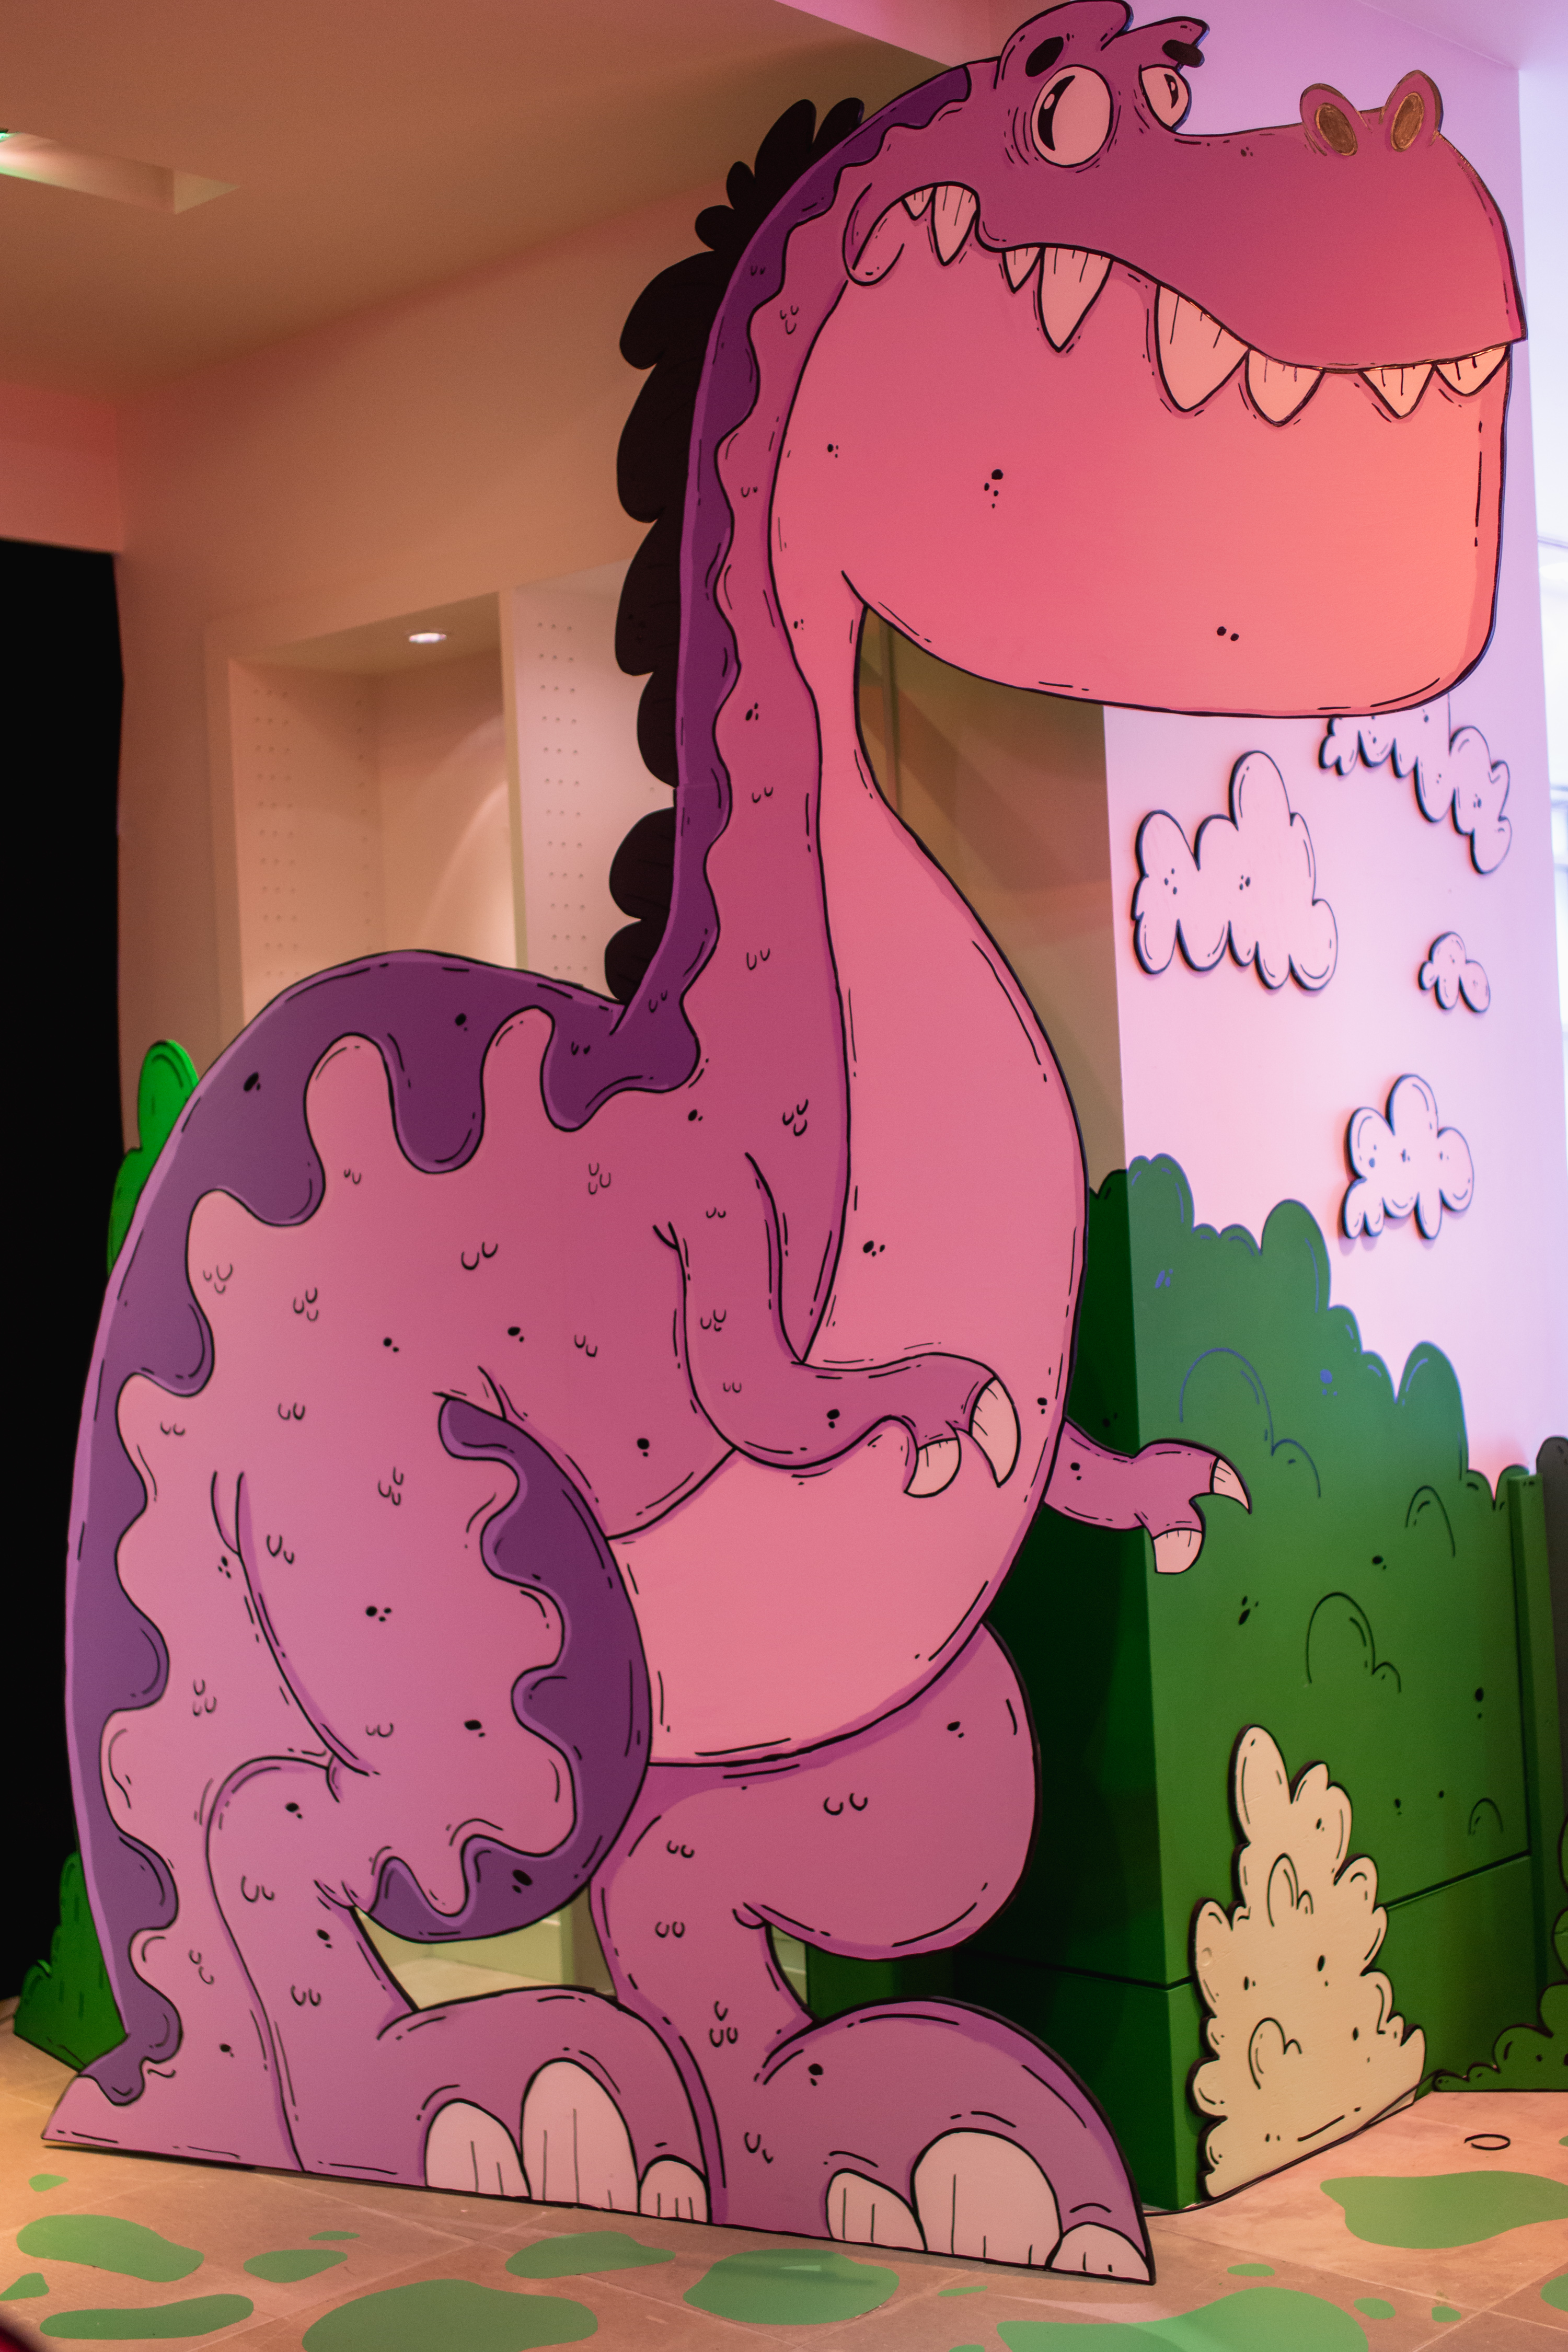 Dinolandia: my cartoon dinosaur museum! I can't believe it exists! 😭